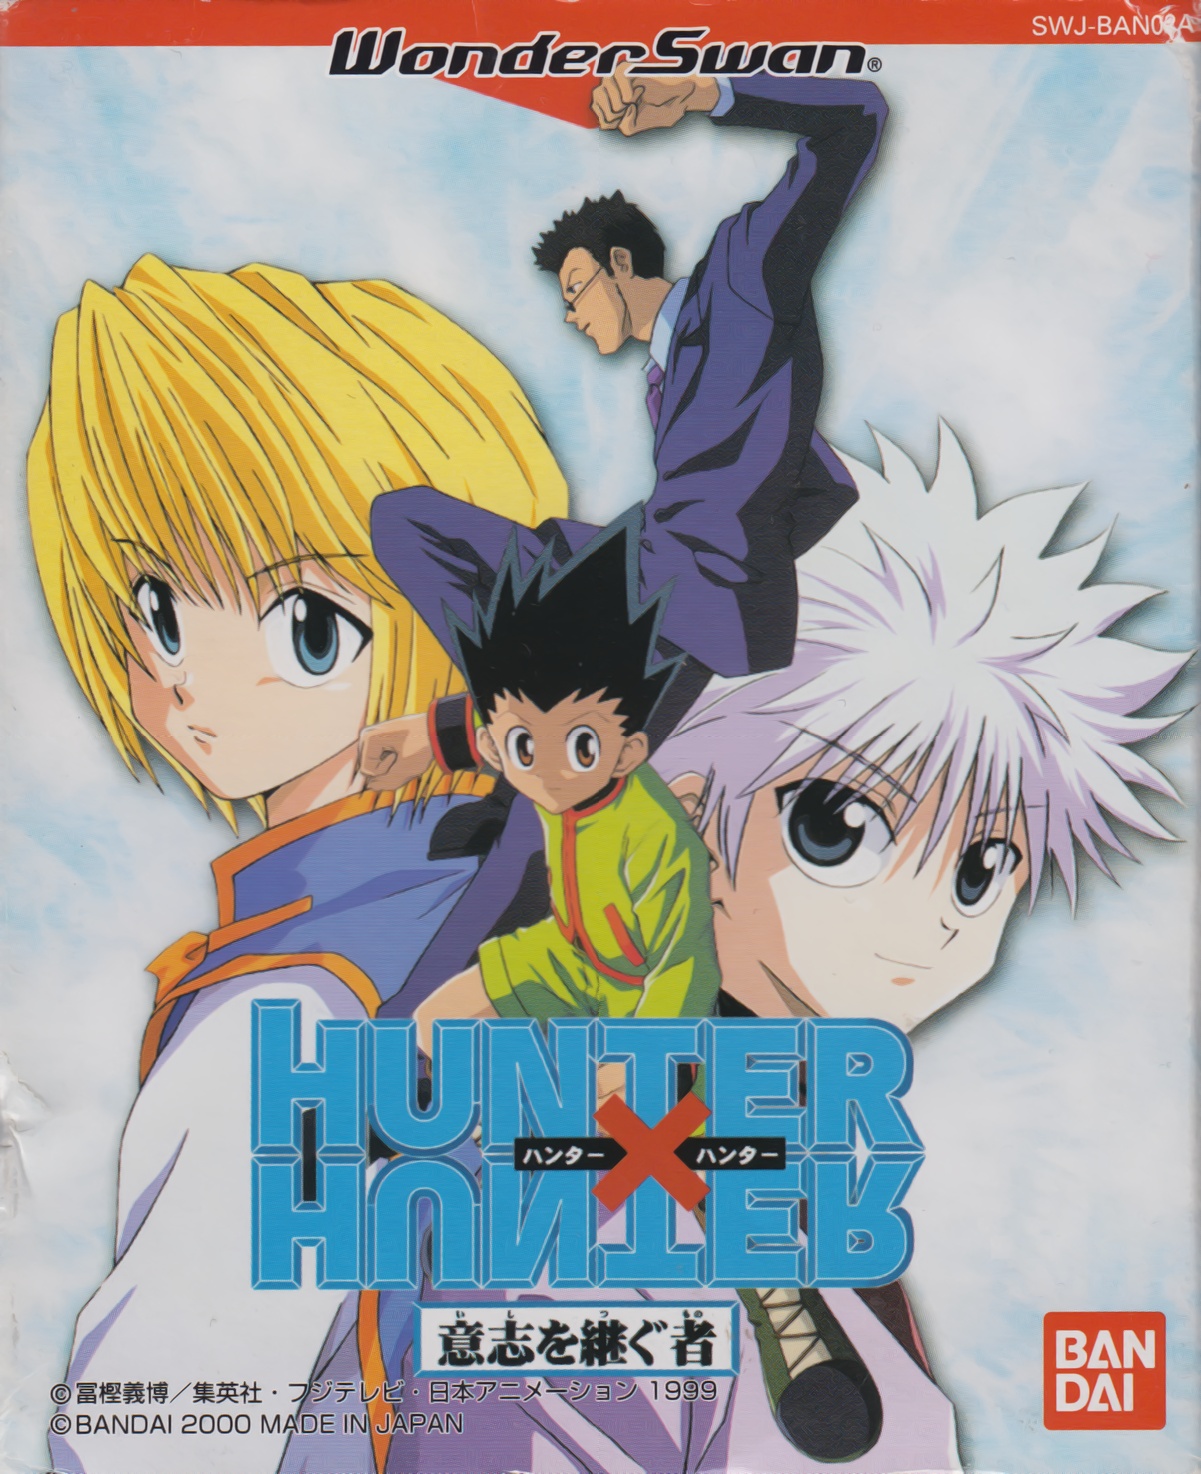 Hunter x Hunter II (Arco 2: Família Zoldyck) - 11 de Março de 2012